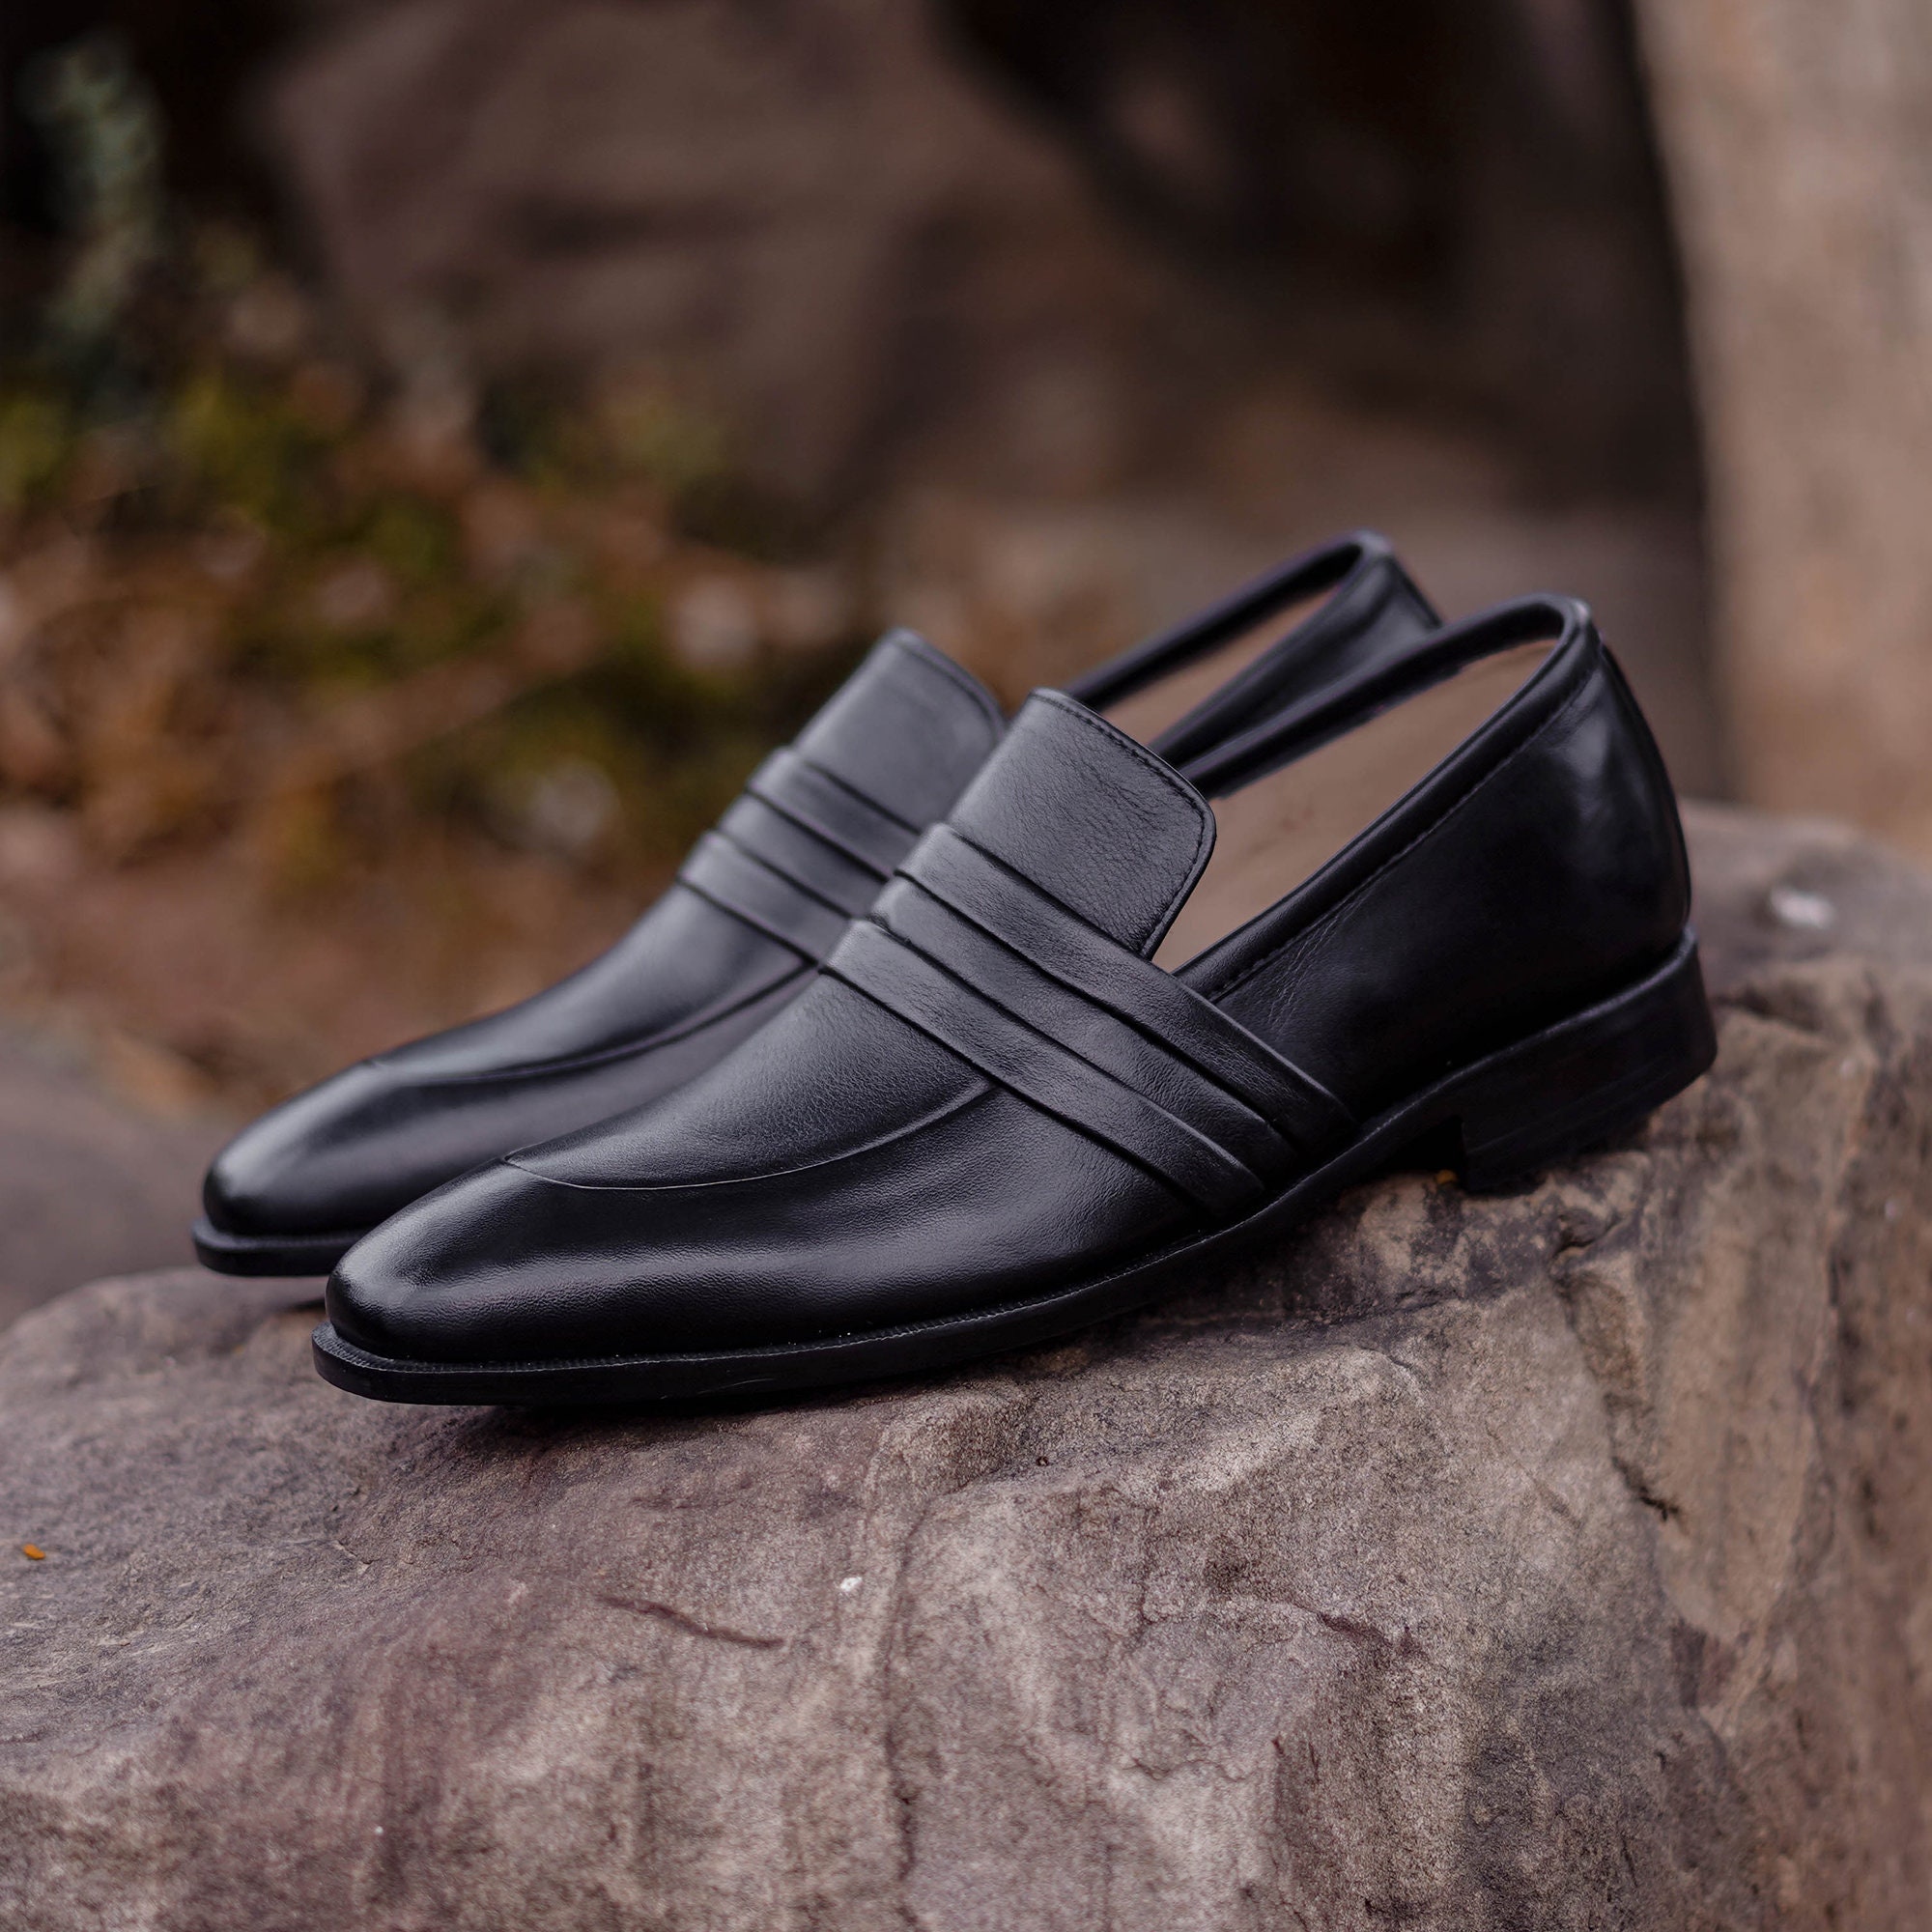 LOUIS VUITTON Black Tasseled Patent Leather Tuxedo Loafers SHOES 7.5 US 8.5  M